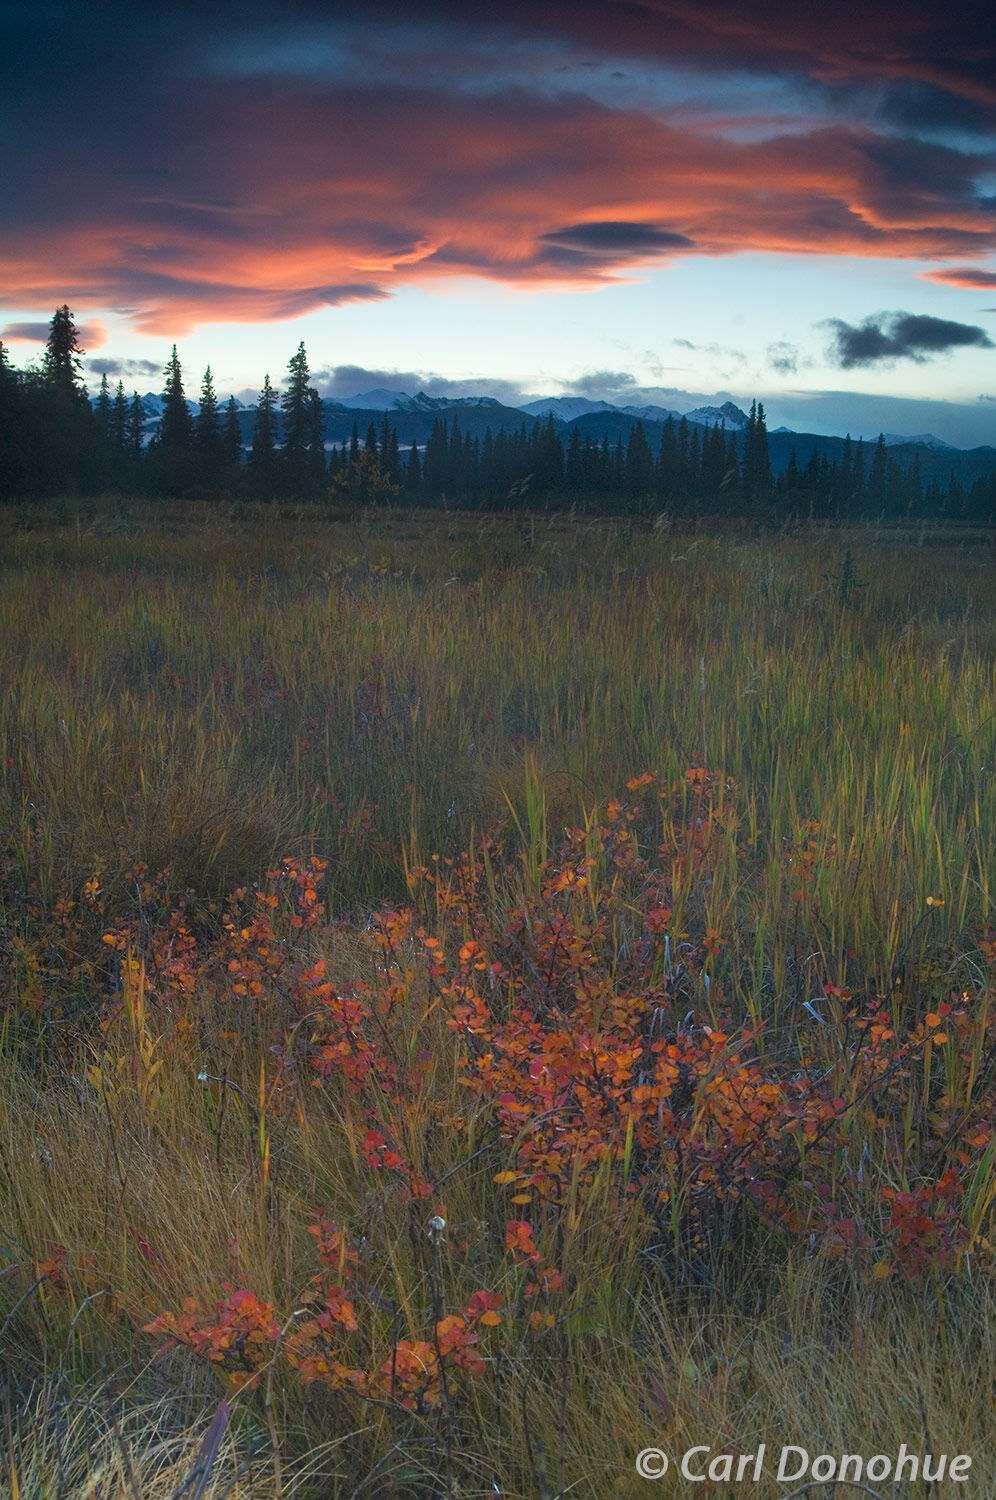 Dwarf Birch and marsh grass in fall colors, near Denali National Park, at sunset, Alaska.